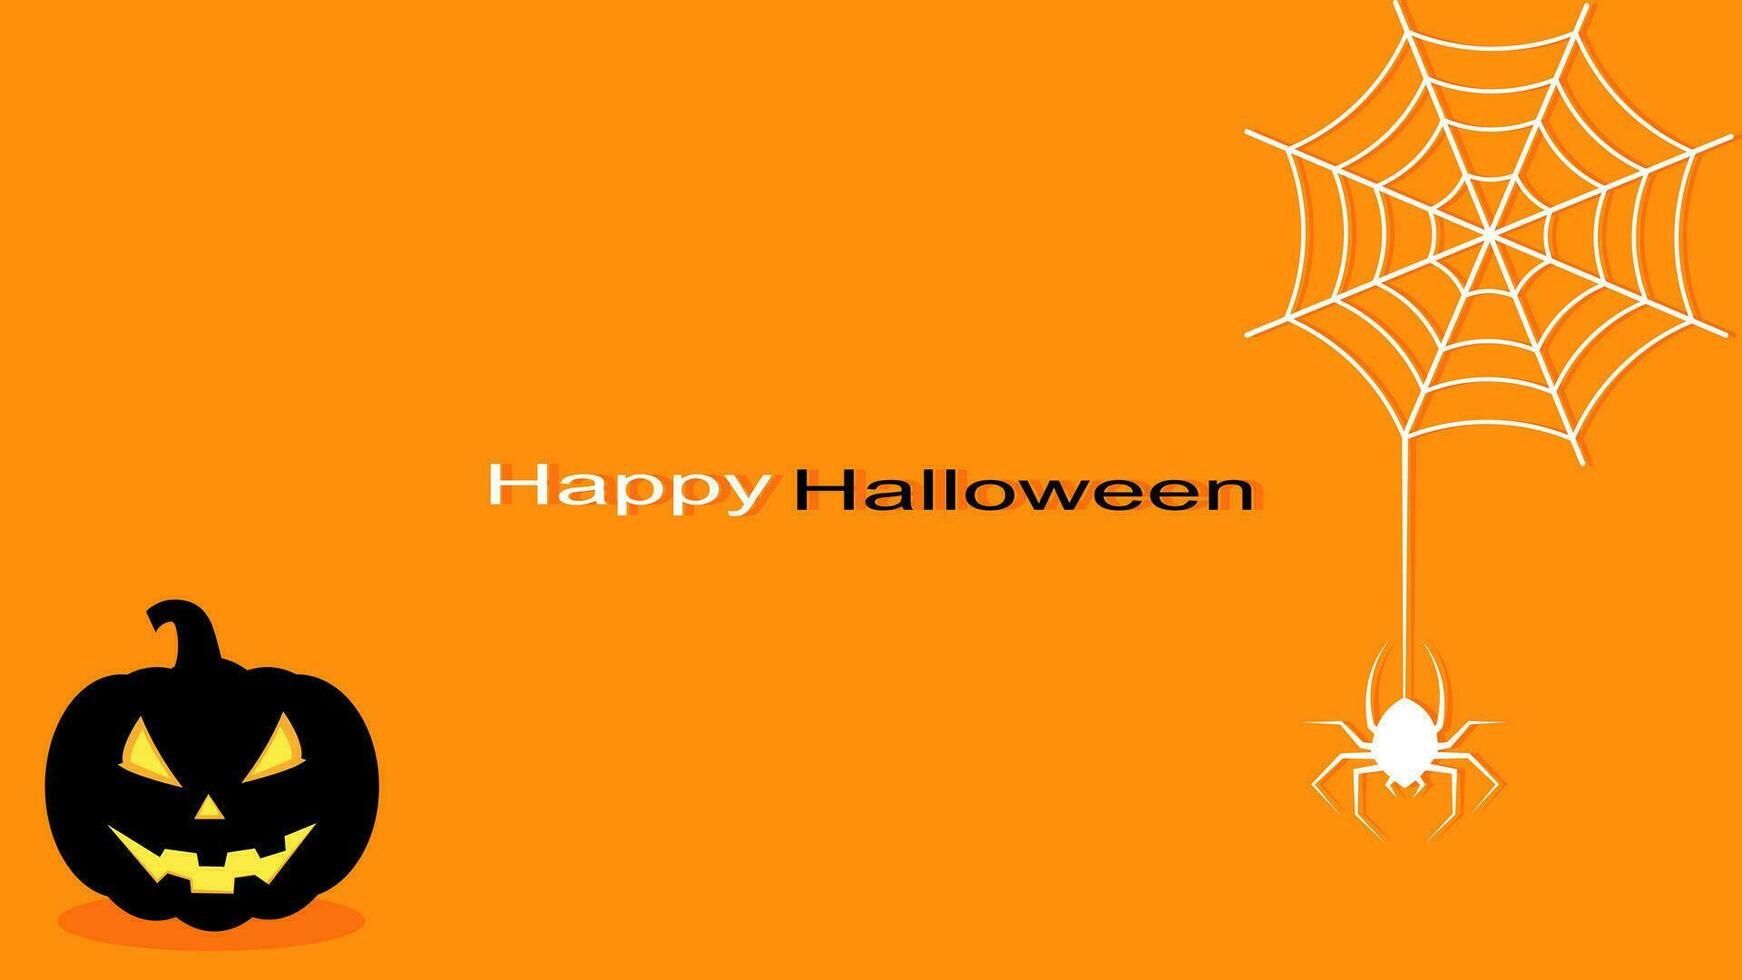 Happy Halloween. spider and pumpkin. Flat design orange background. vector